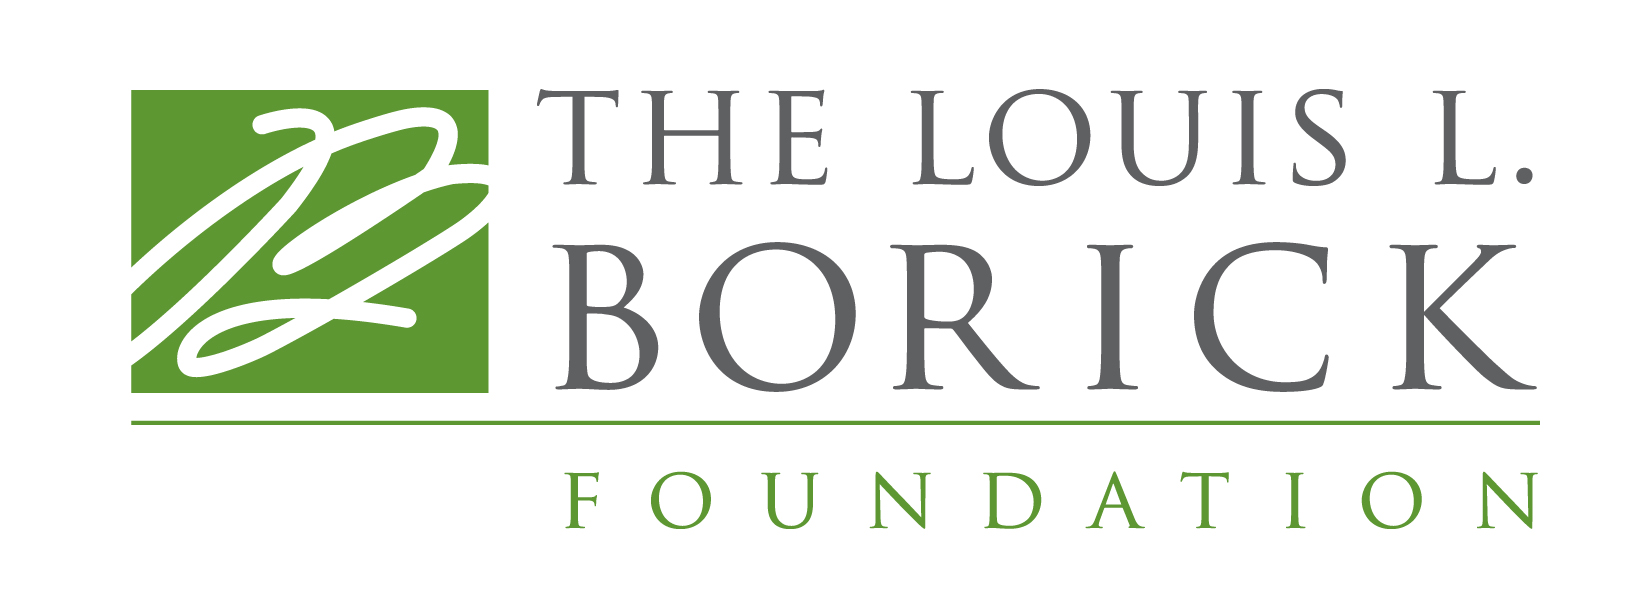 The Louis L. Borick Foundation logo